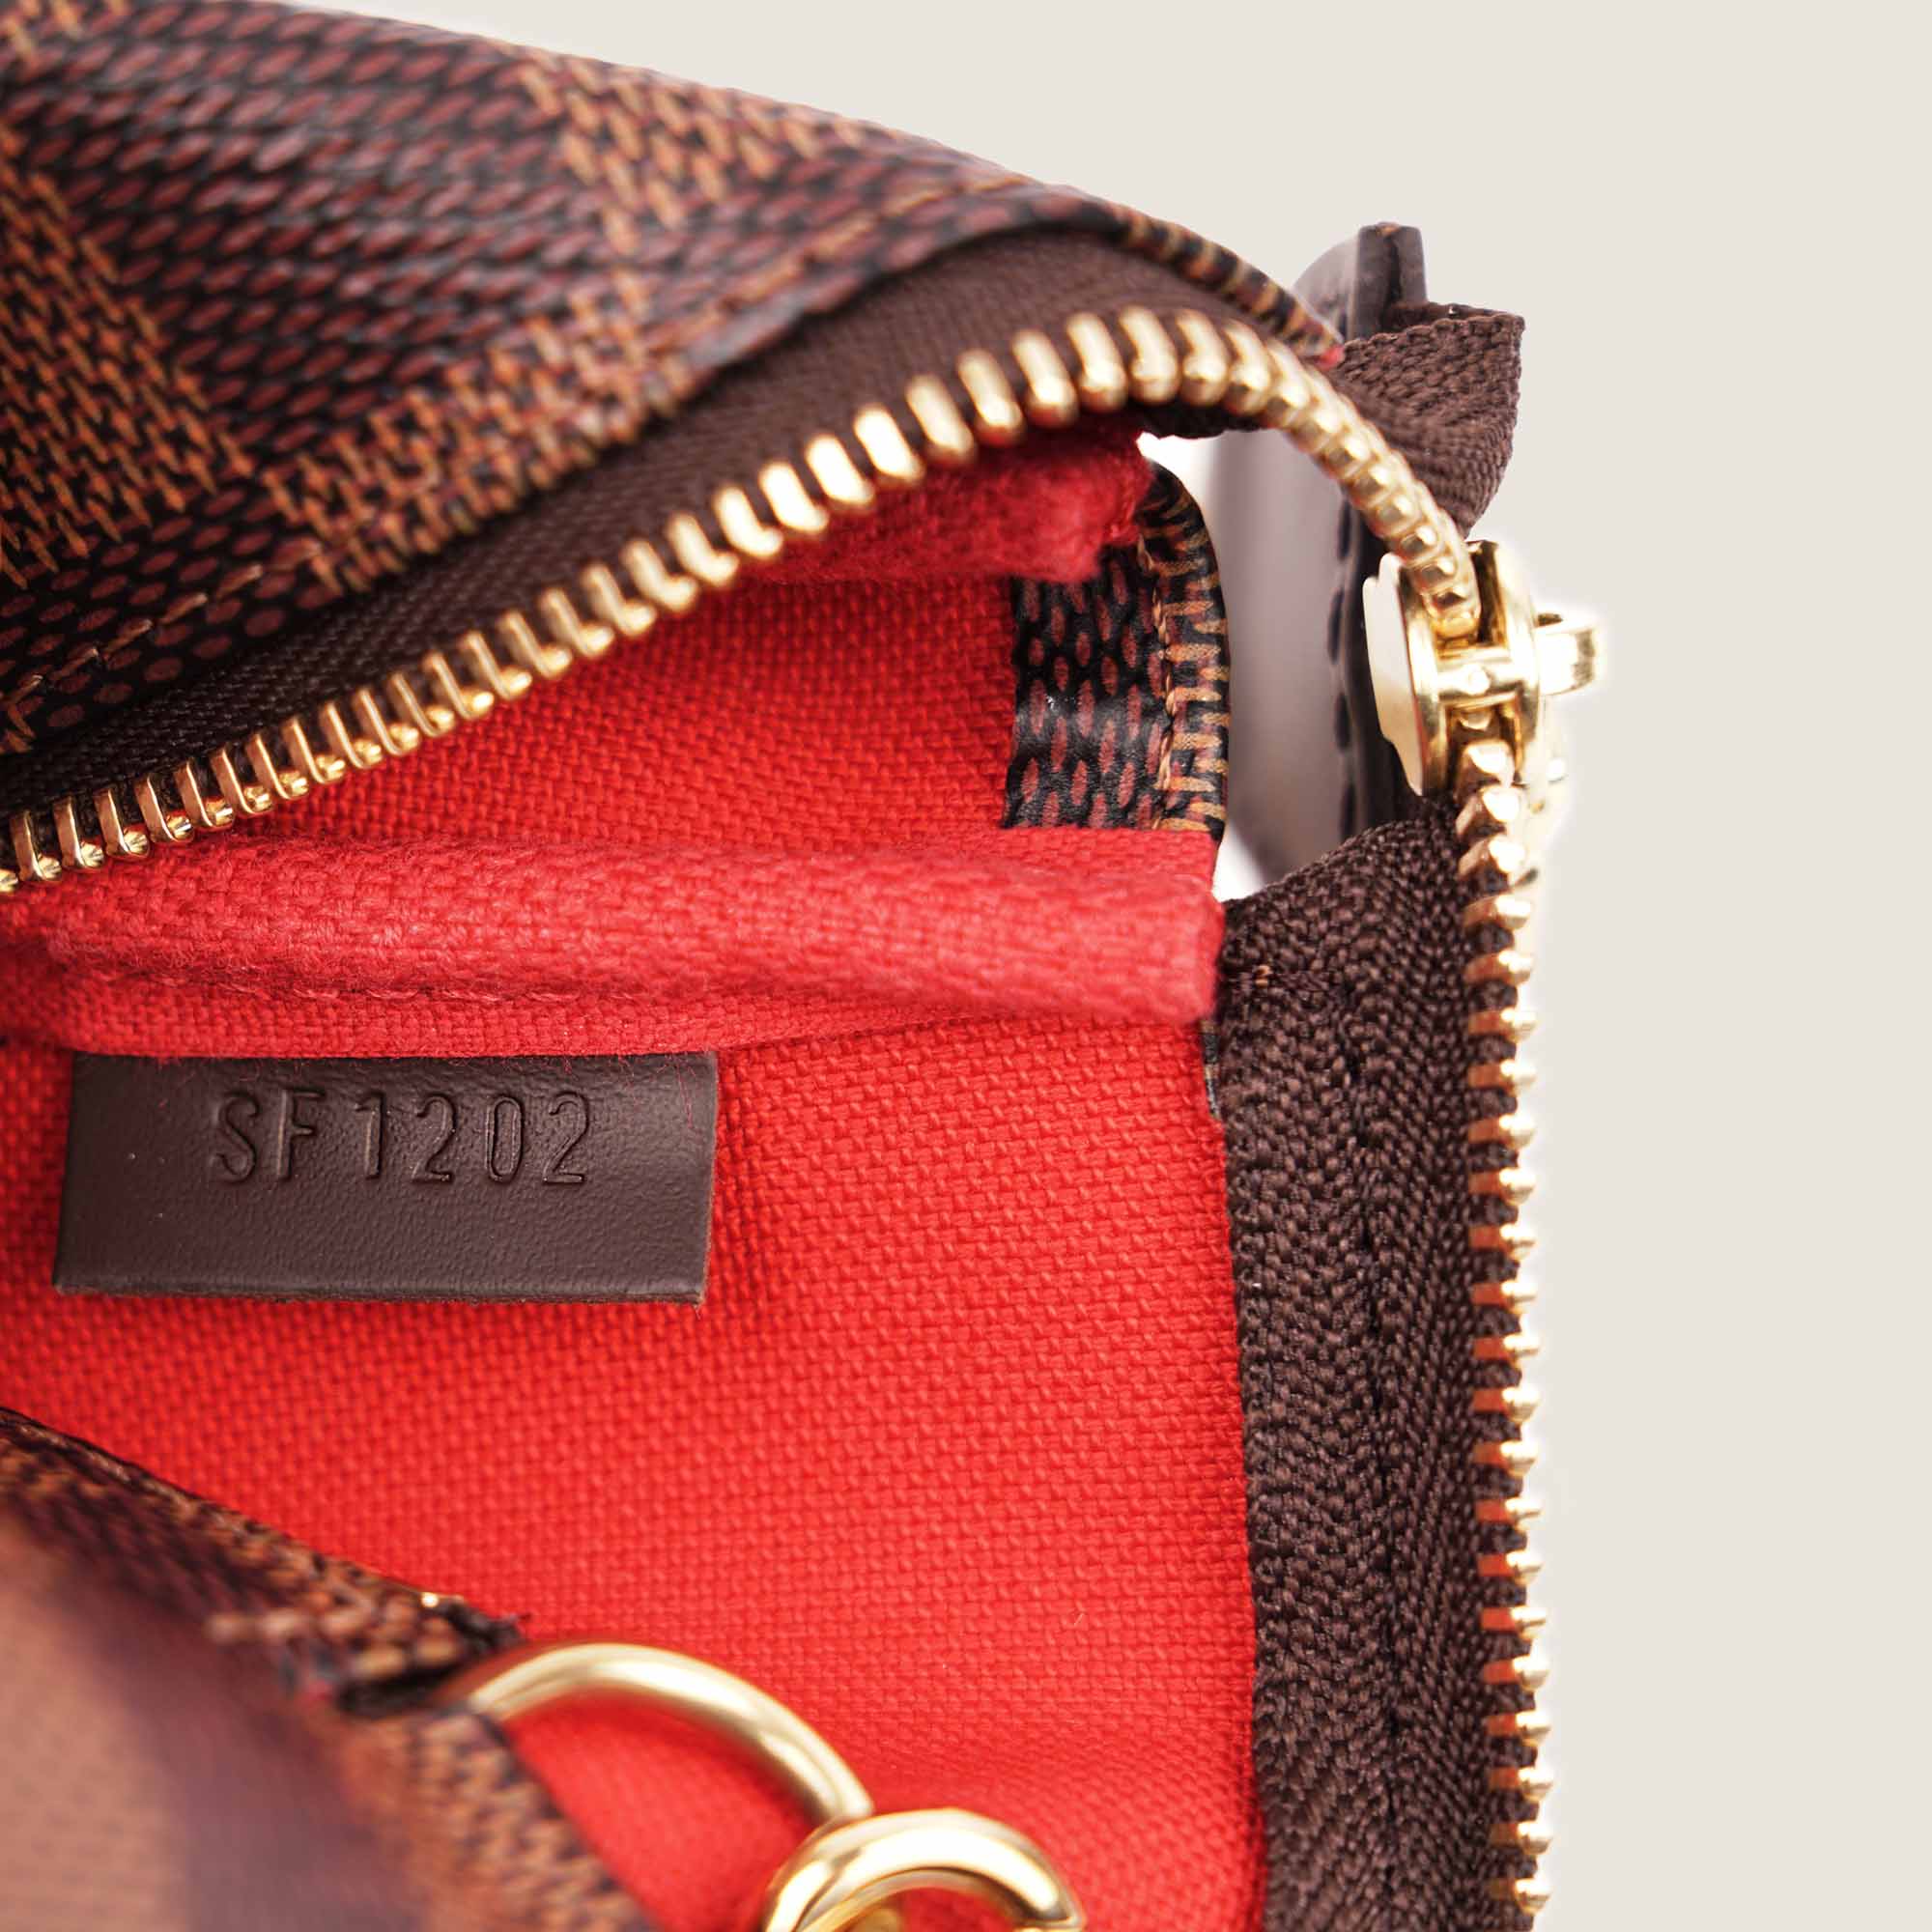 Mini Pochette Accessories - LOUIS VUITTON - Affordable Luxury image